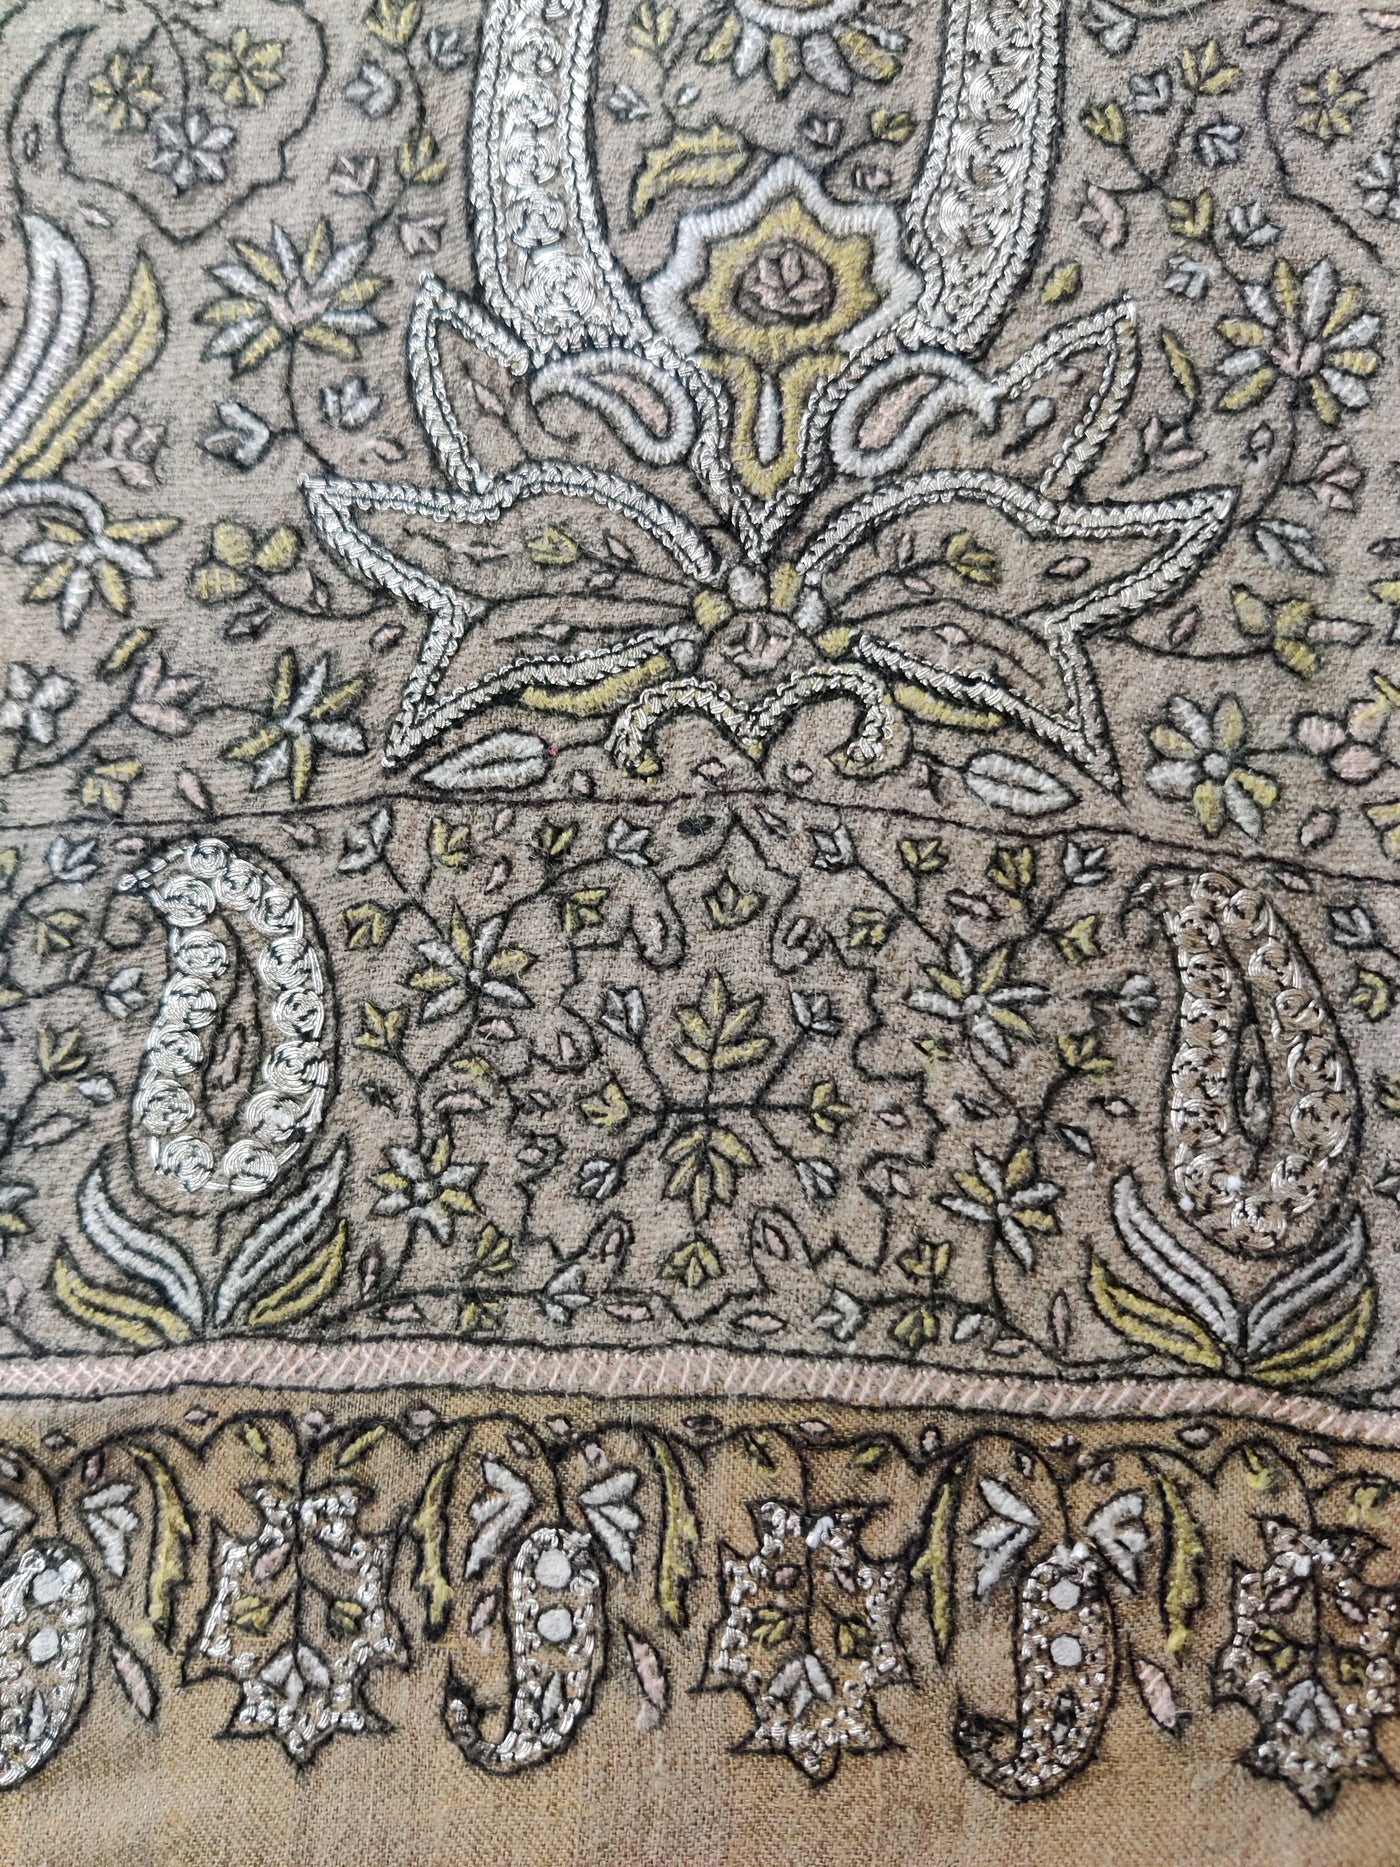 Pure Pashmina Shawl with Hand Tilla Embroidery & Sozni Embroidery